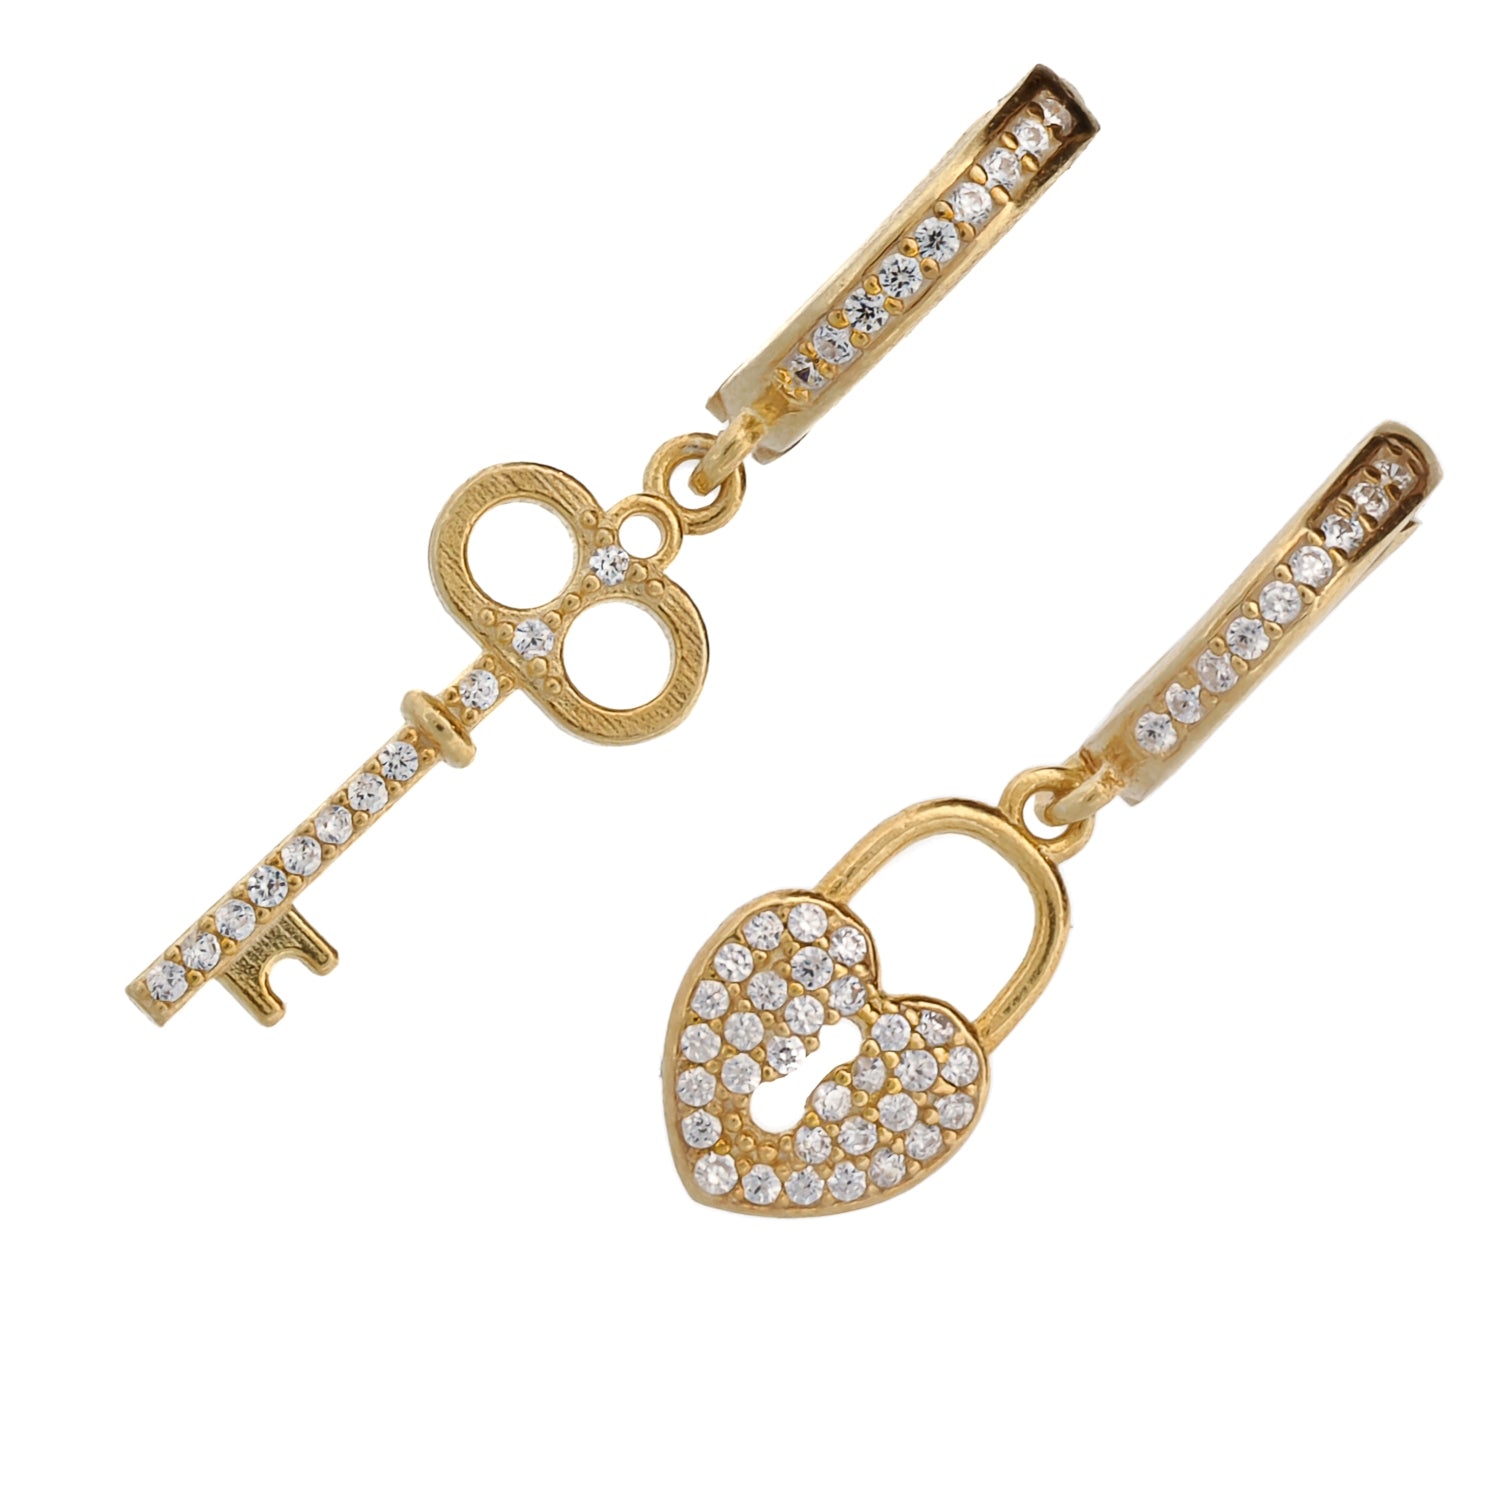 Symbolic Key &amp; Heart Lock Adorned with Dazzling Cz Diamonds